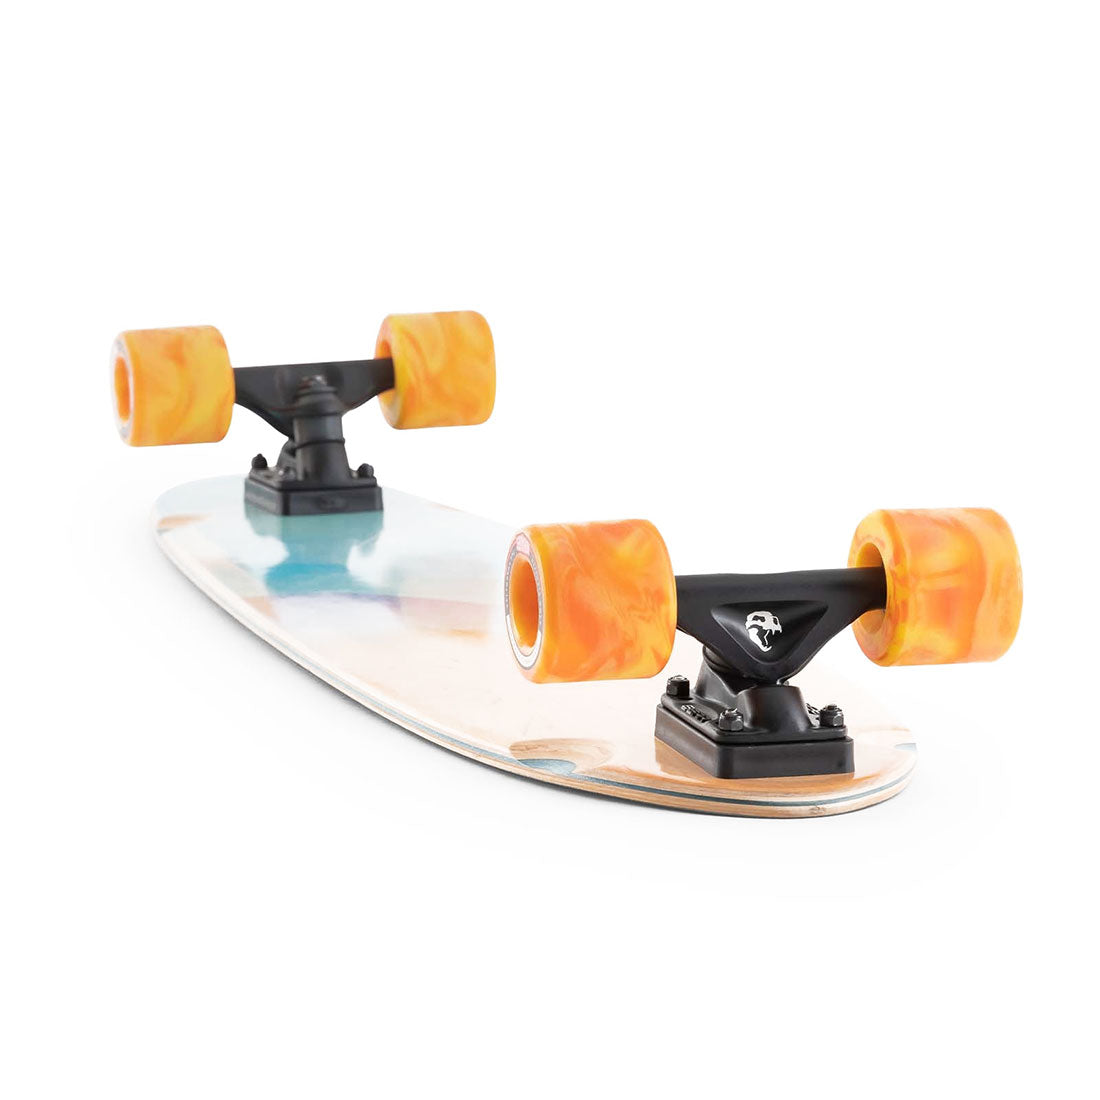 Landyachtz Dipper 36 Complete - Watercolour Skateboard Completes Longboards